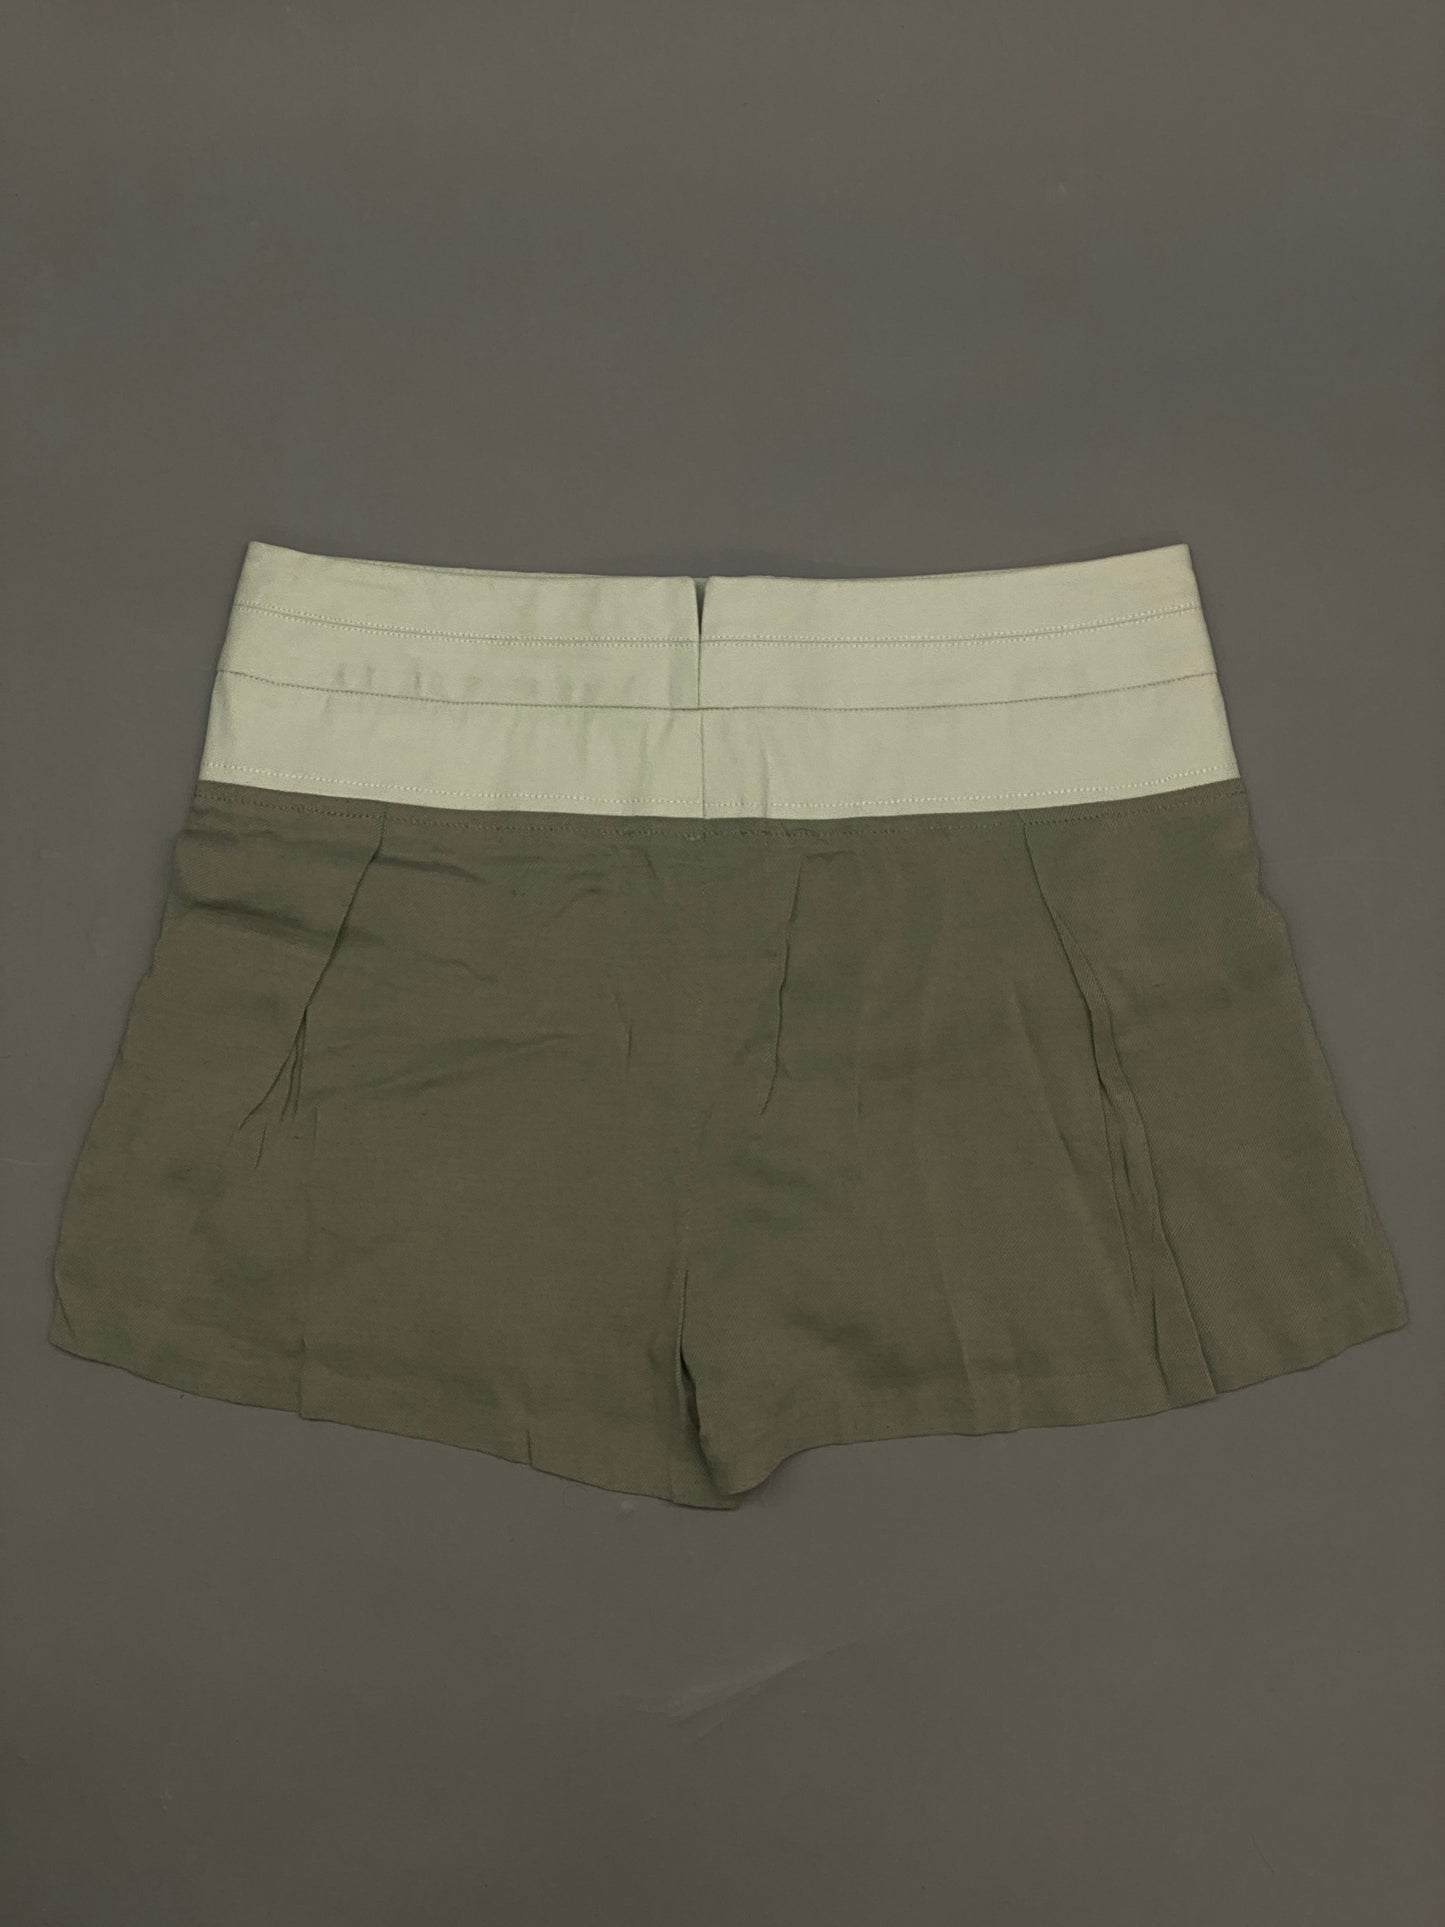 Helmut Lang Triton Pleated Shorts